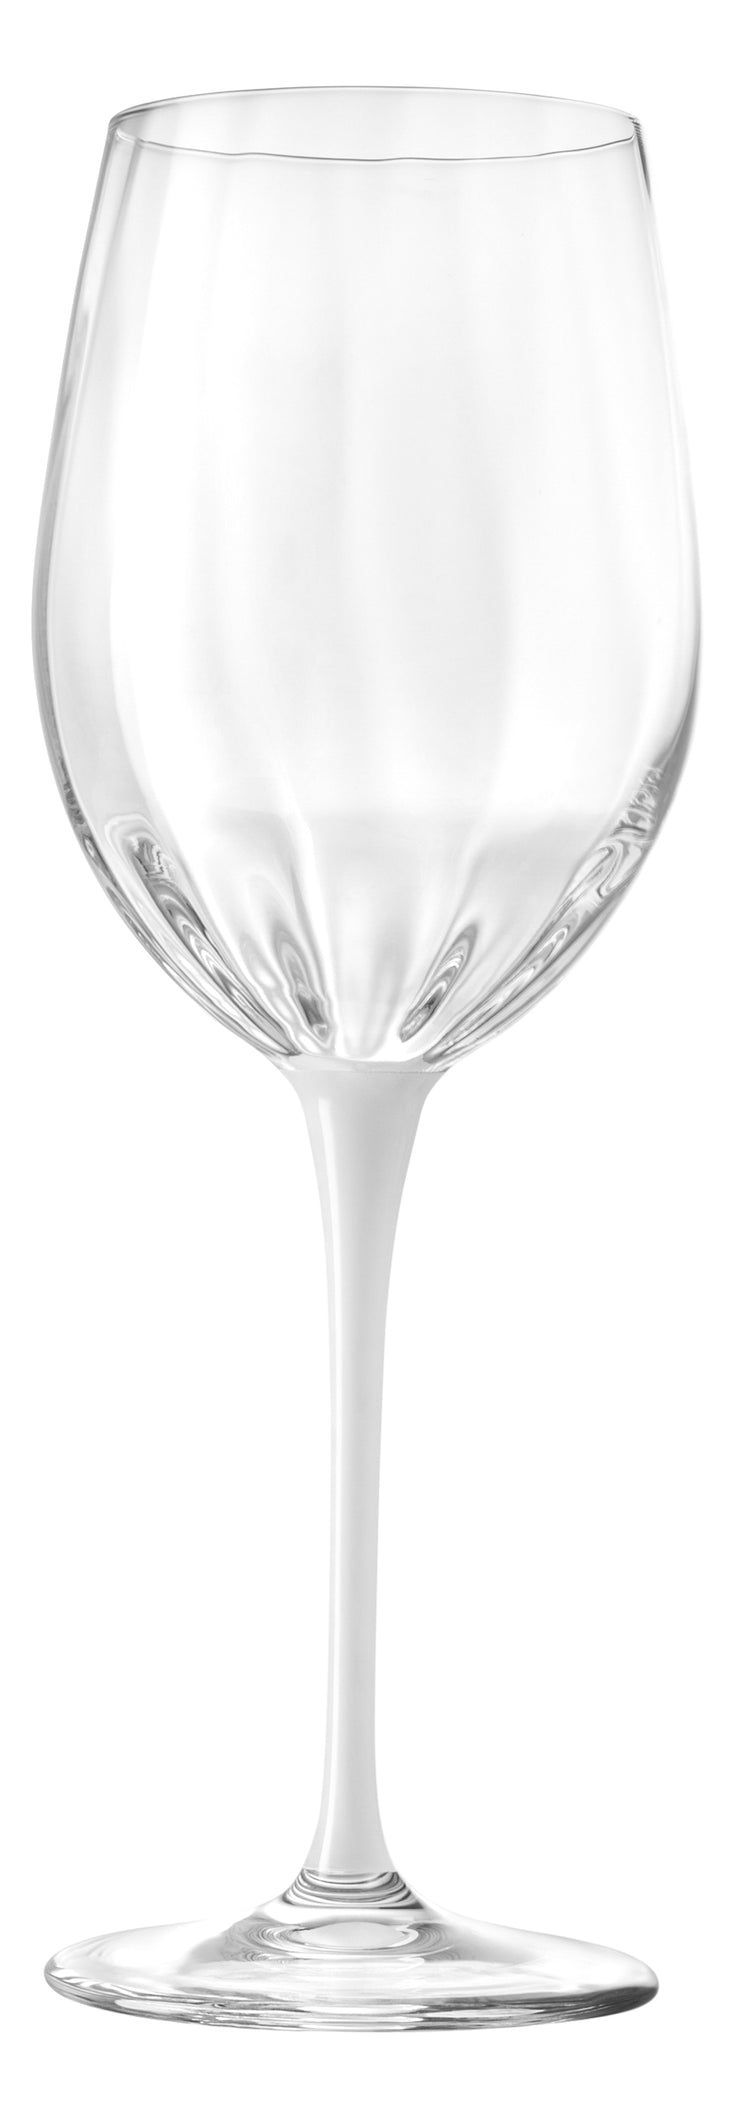 Spectrum Red Wine Glass with White Stem, 18 oz. Set of 6